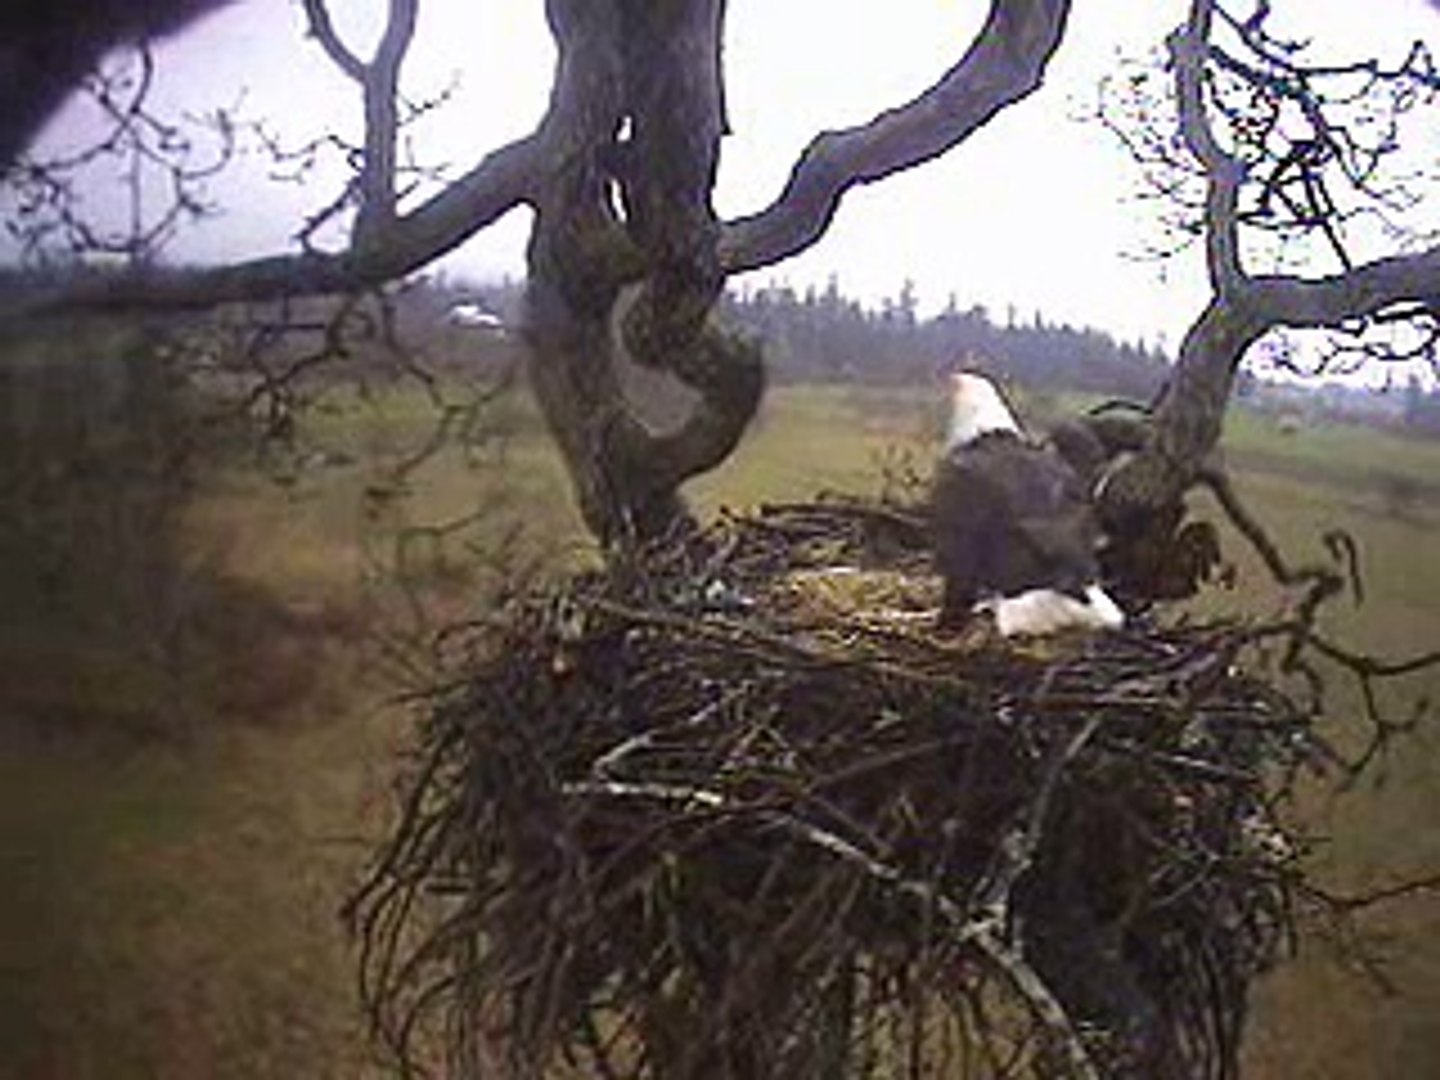 bald eagle fighting over nest,juveniles intrude